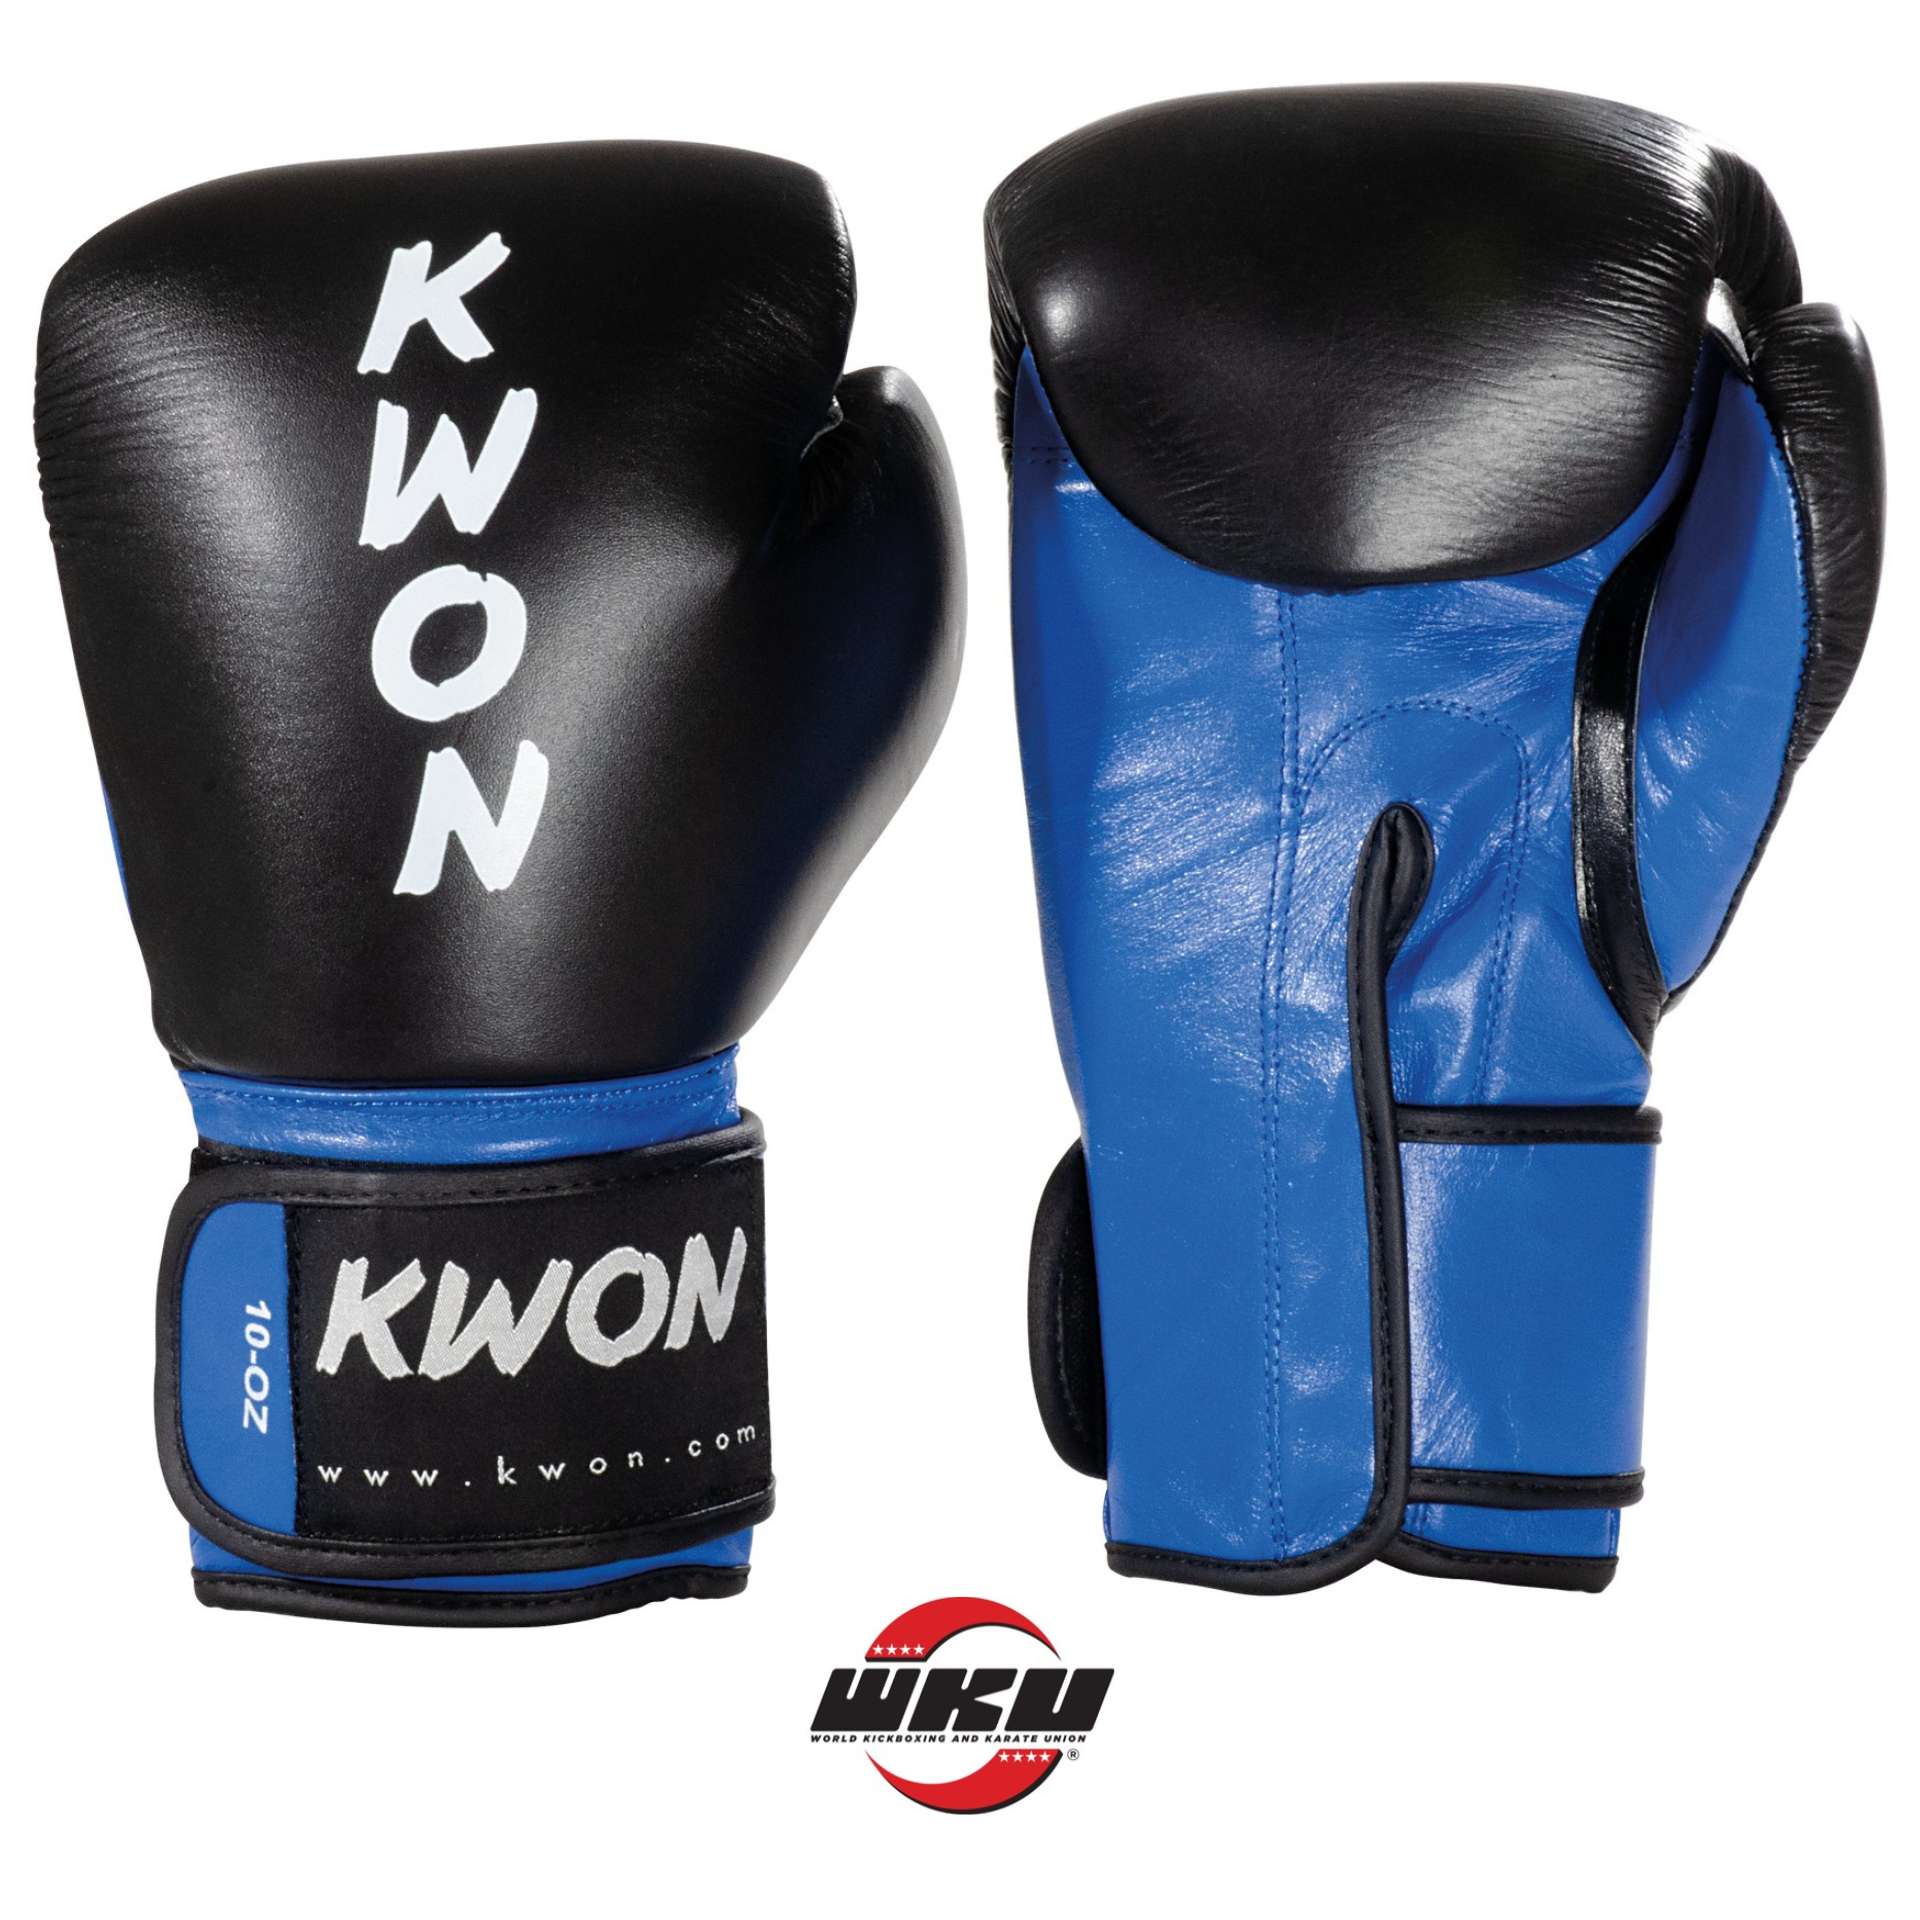 KO Champ Boxing Gloves - WKU recognised